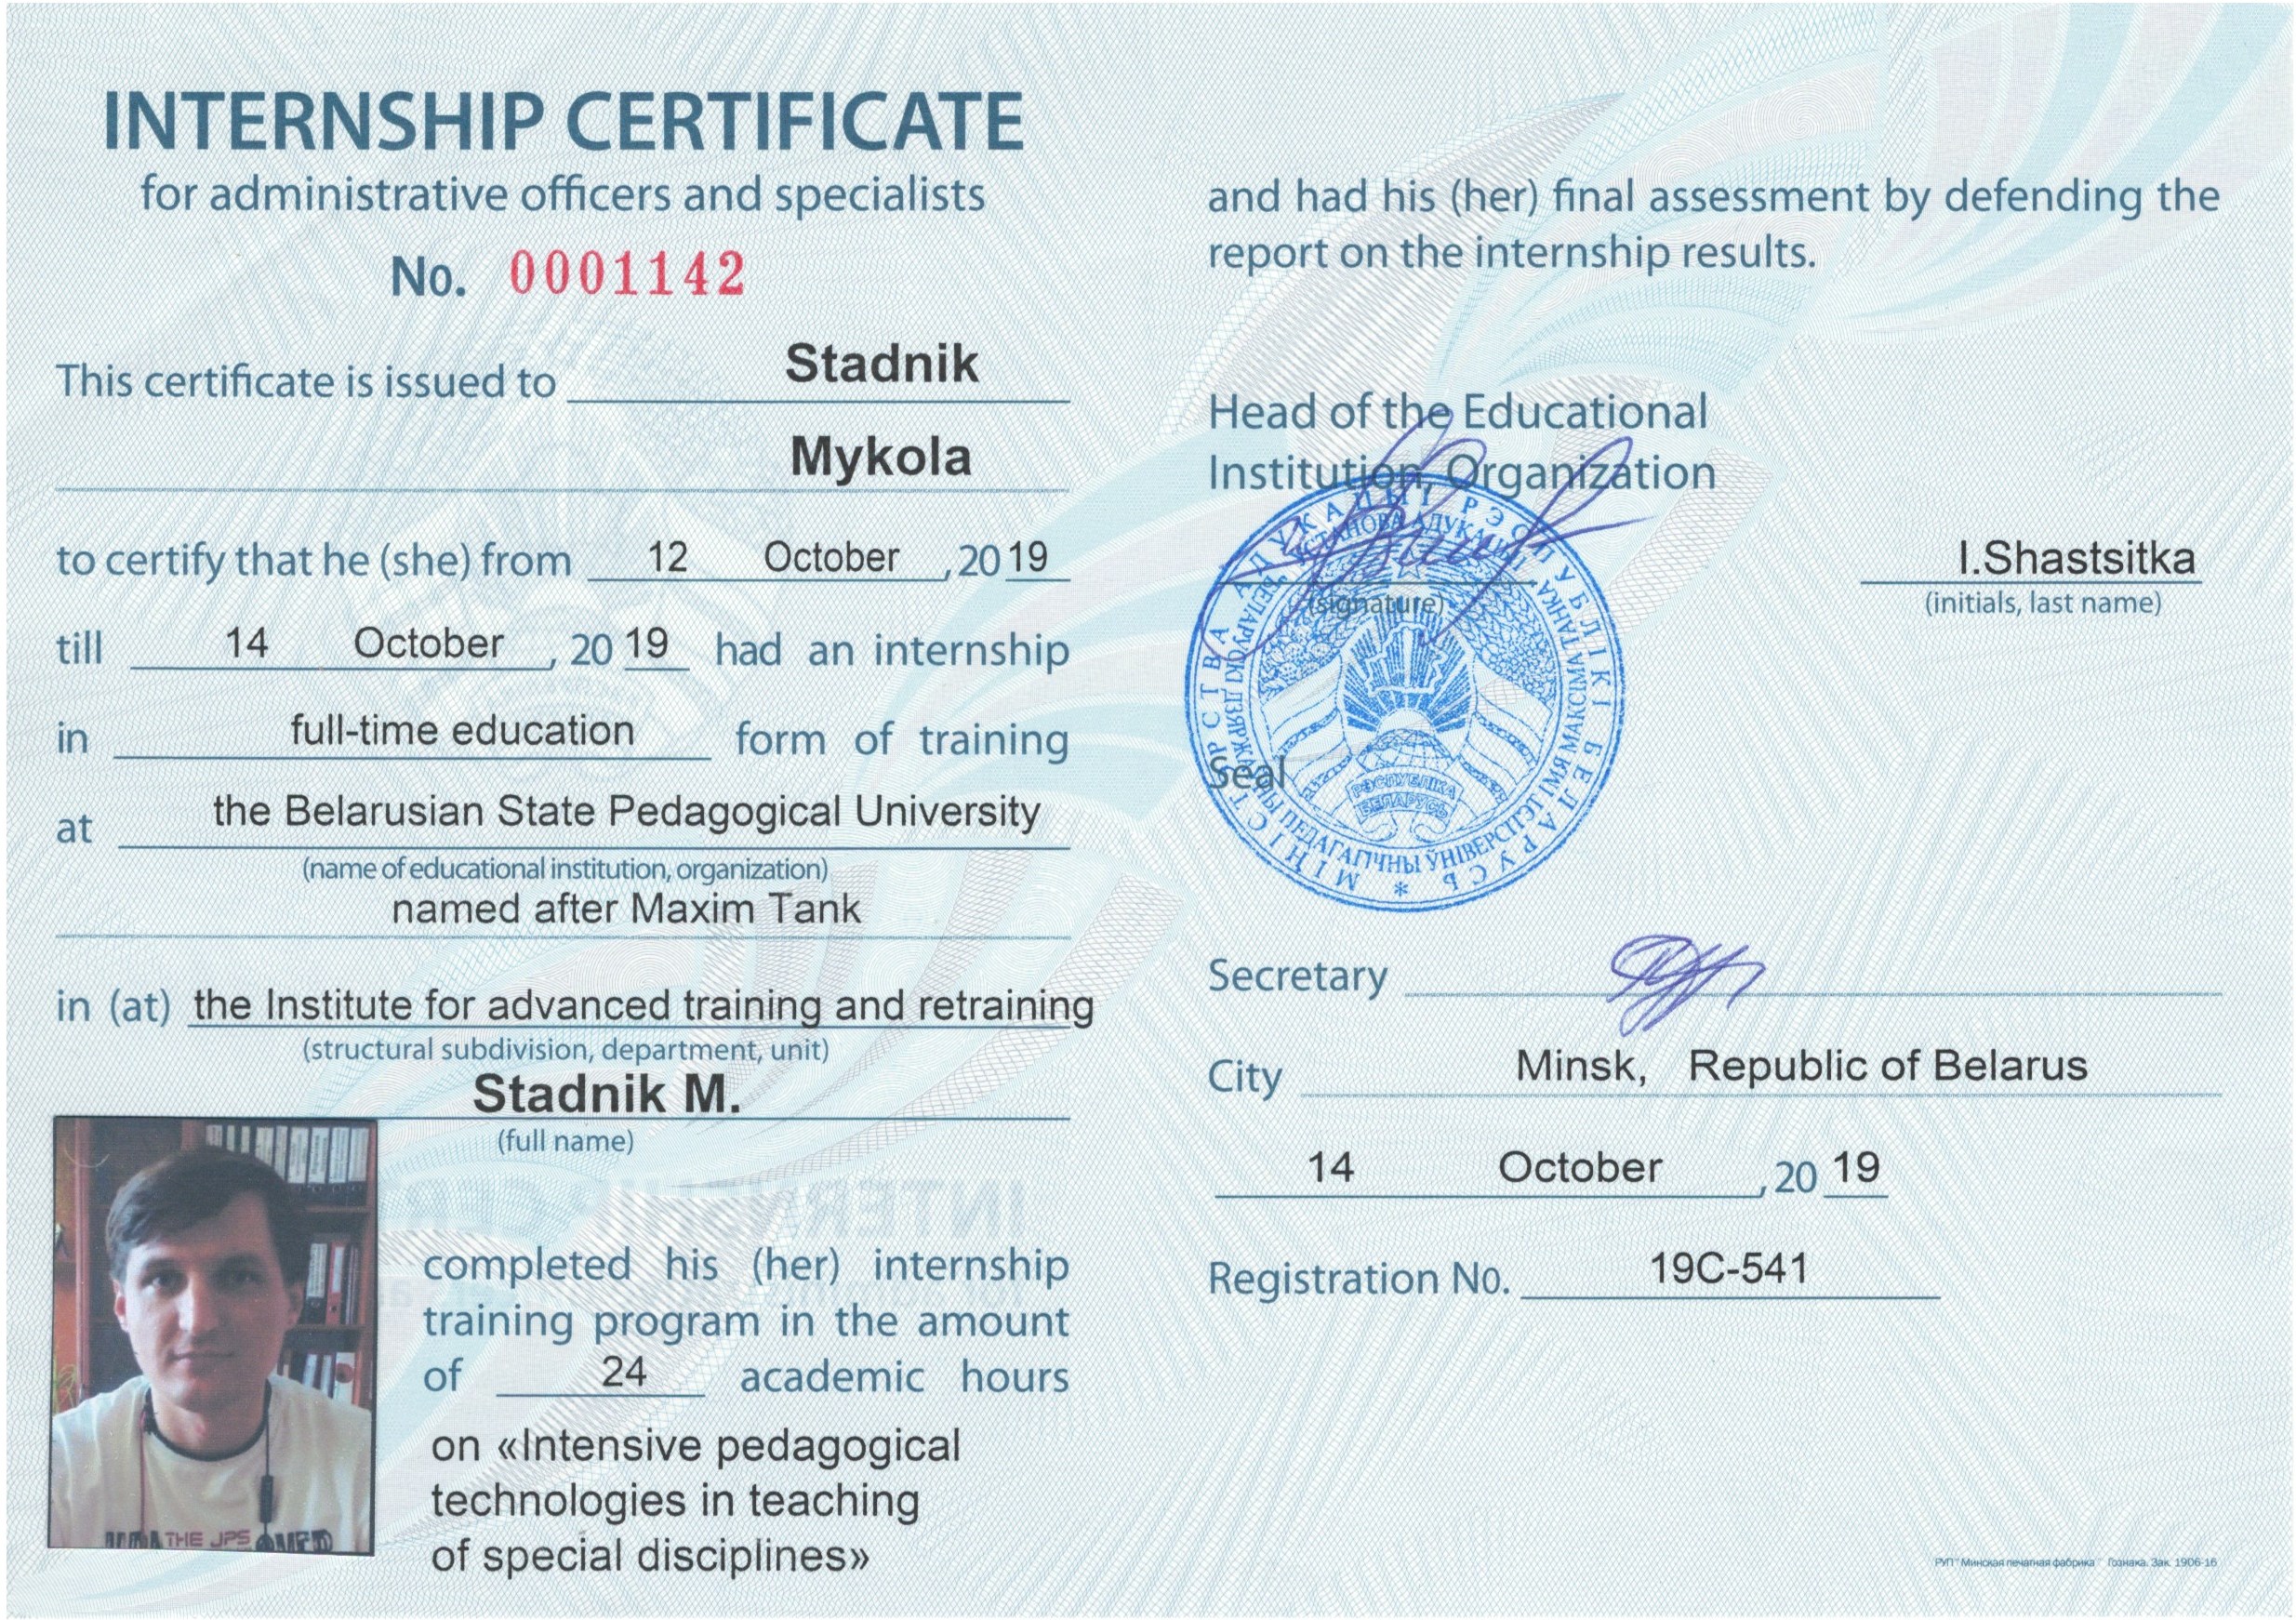 Internship certificate